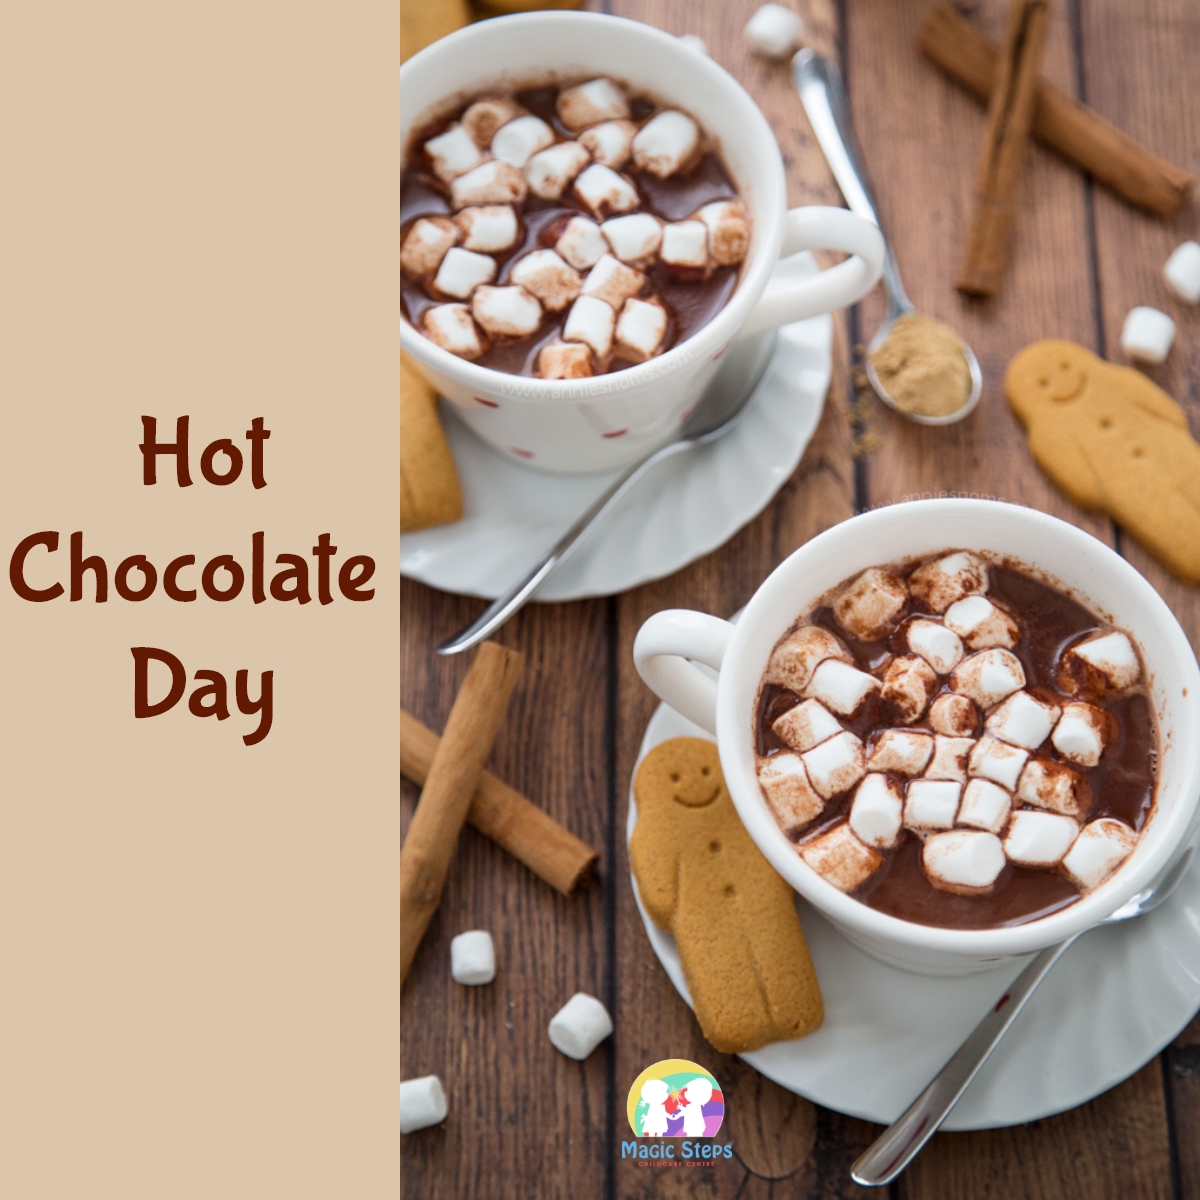 Hot Chocolate Day- Friday 29th January